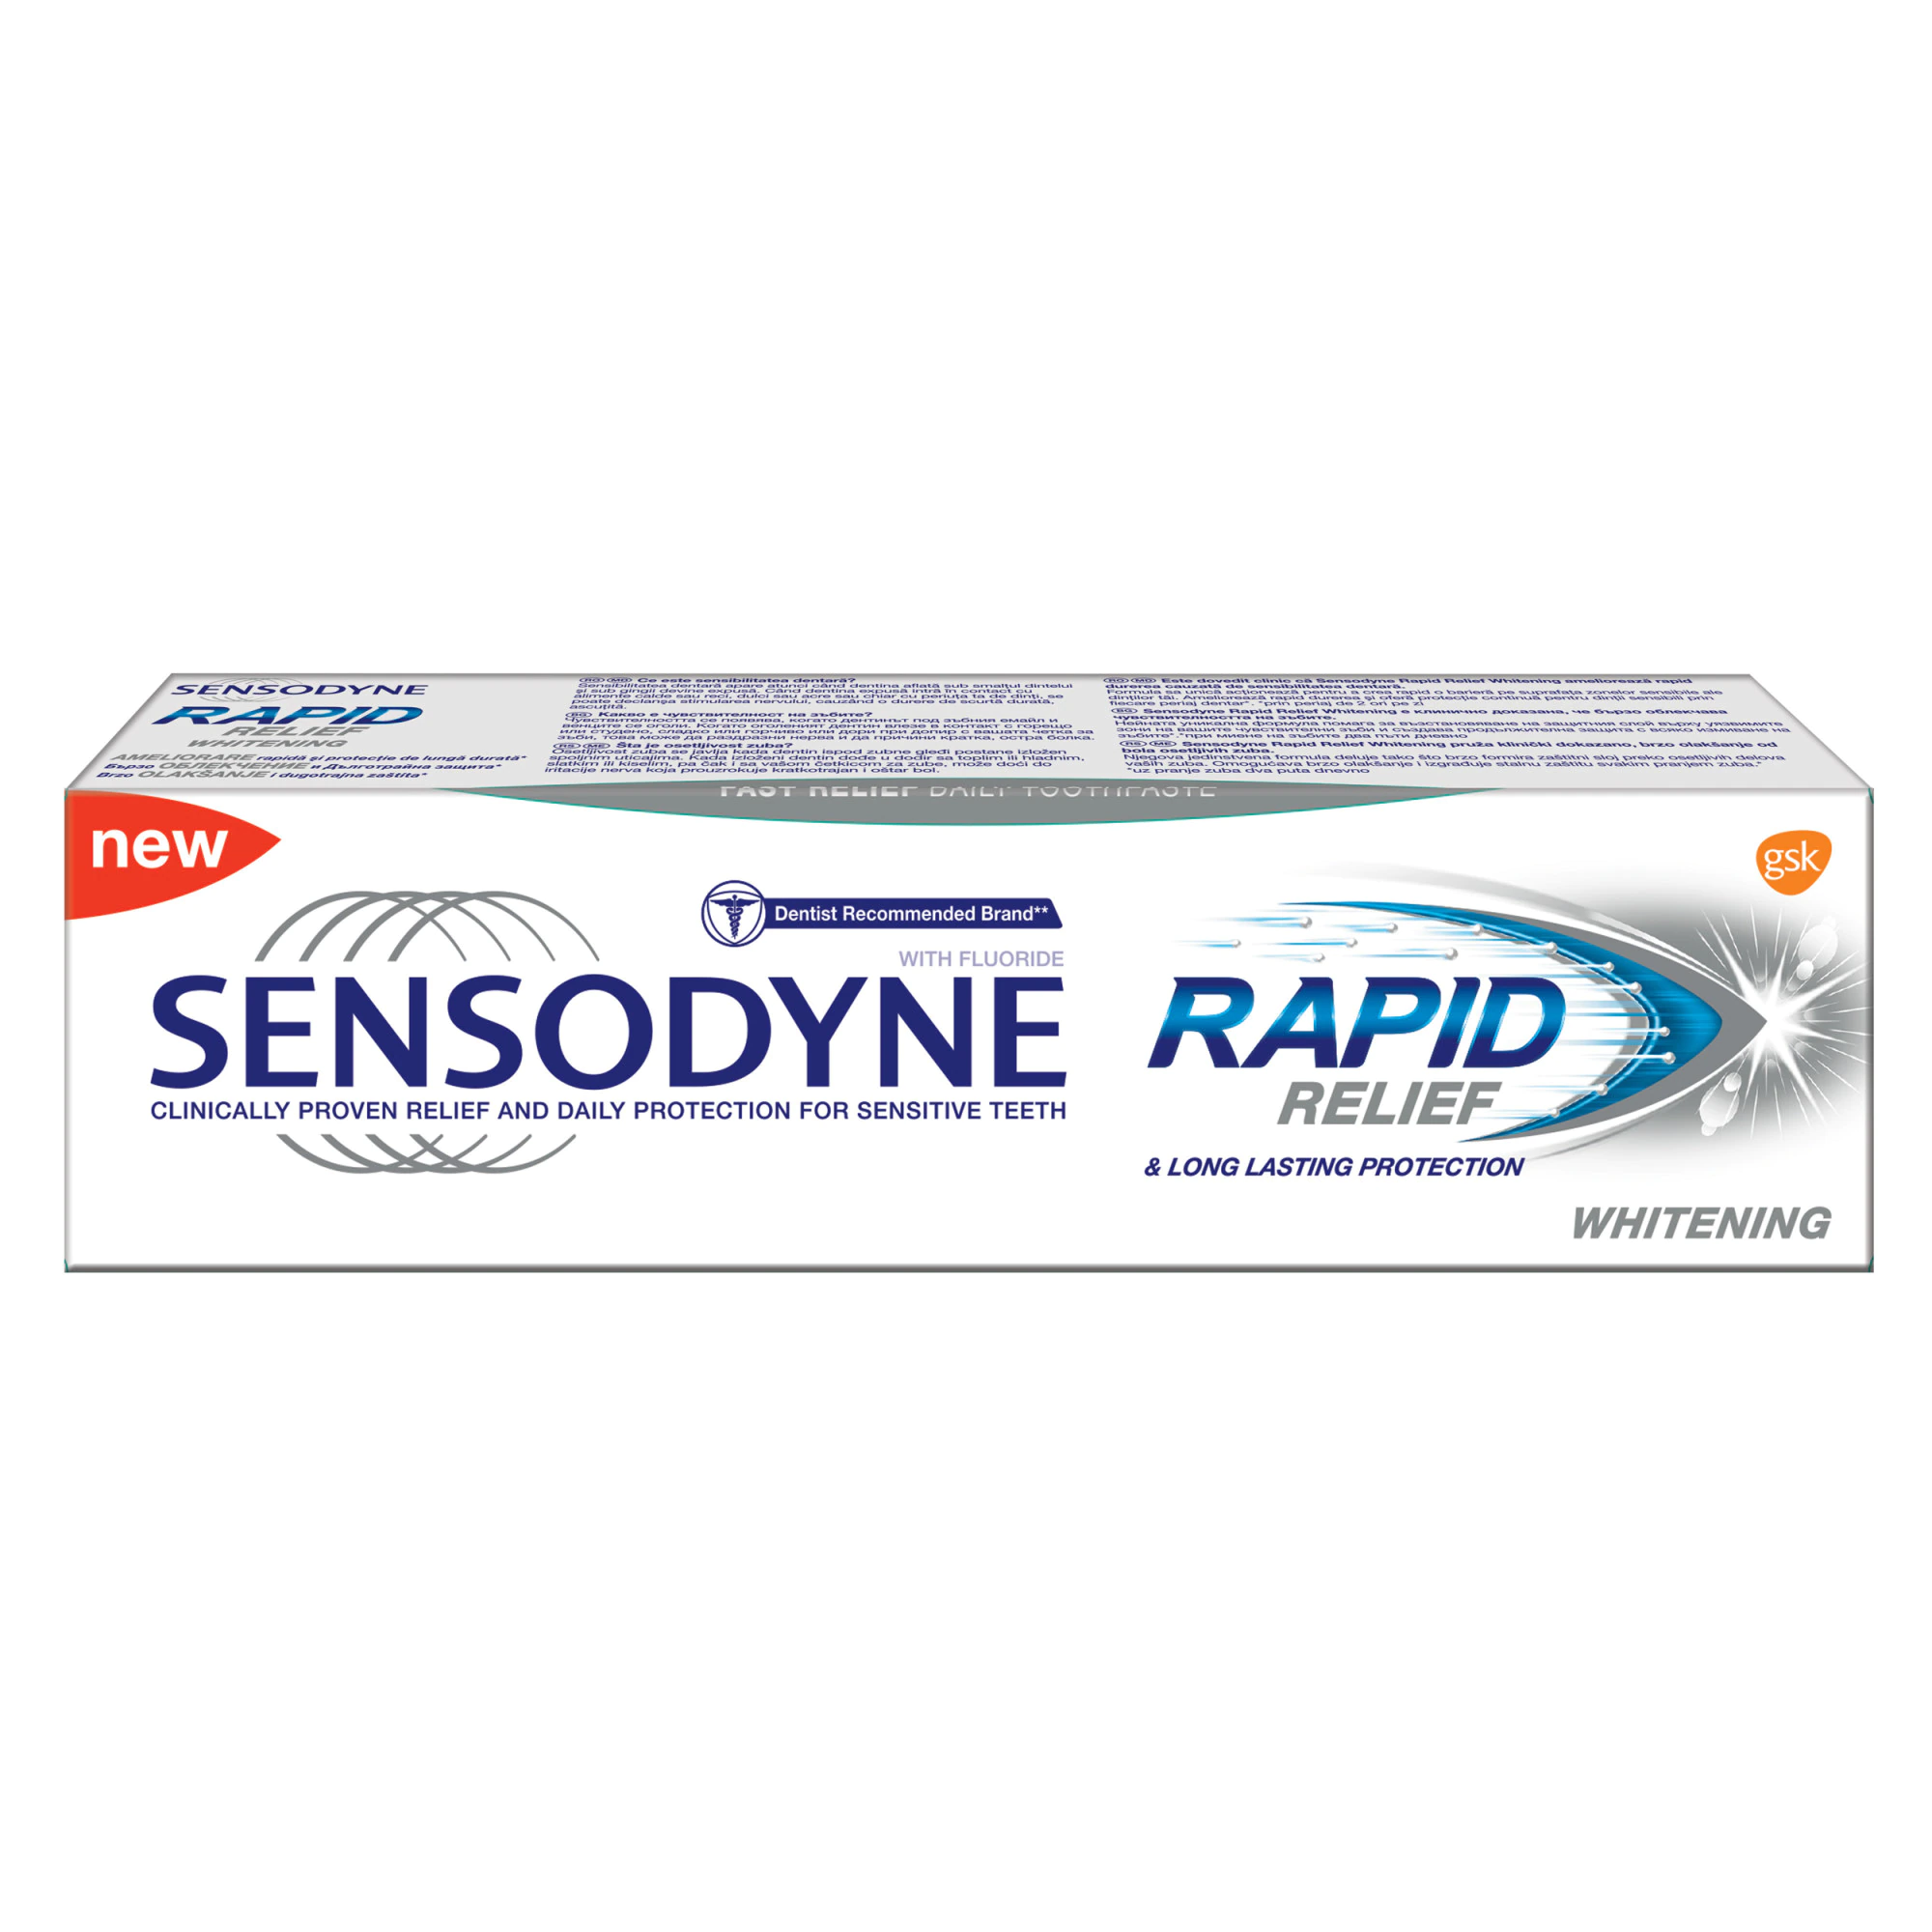 Sensodyne Rapid Relief Whitening [1]